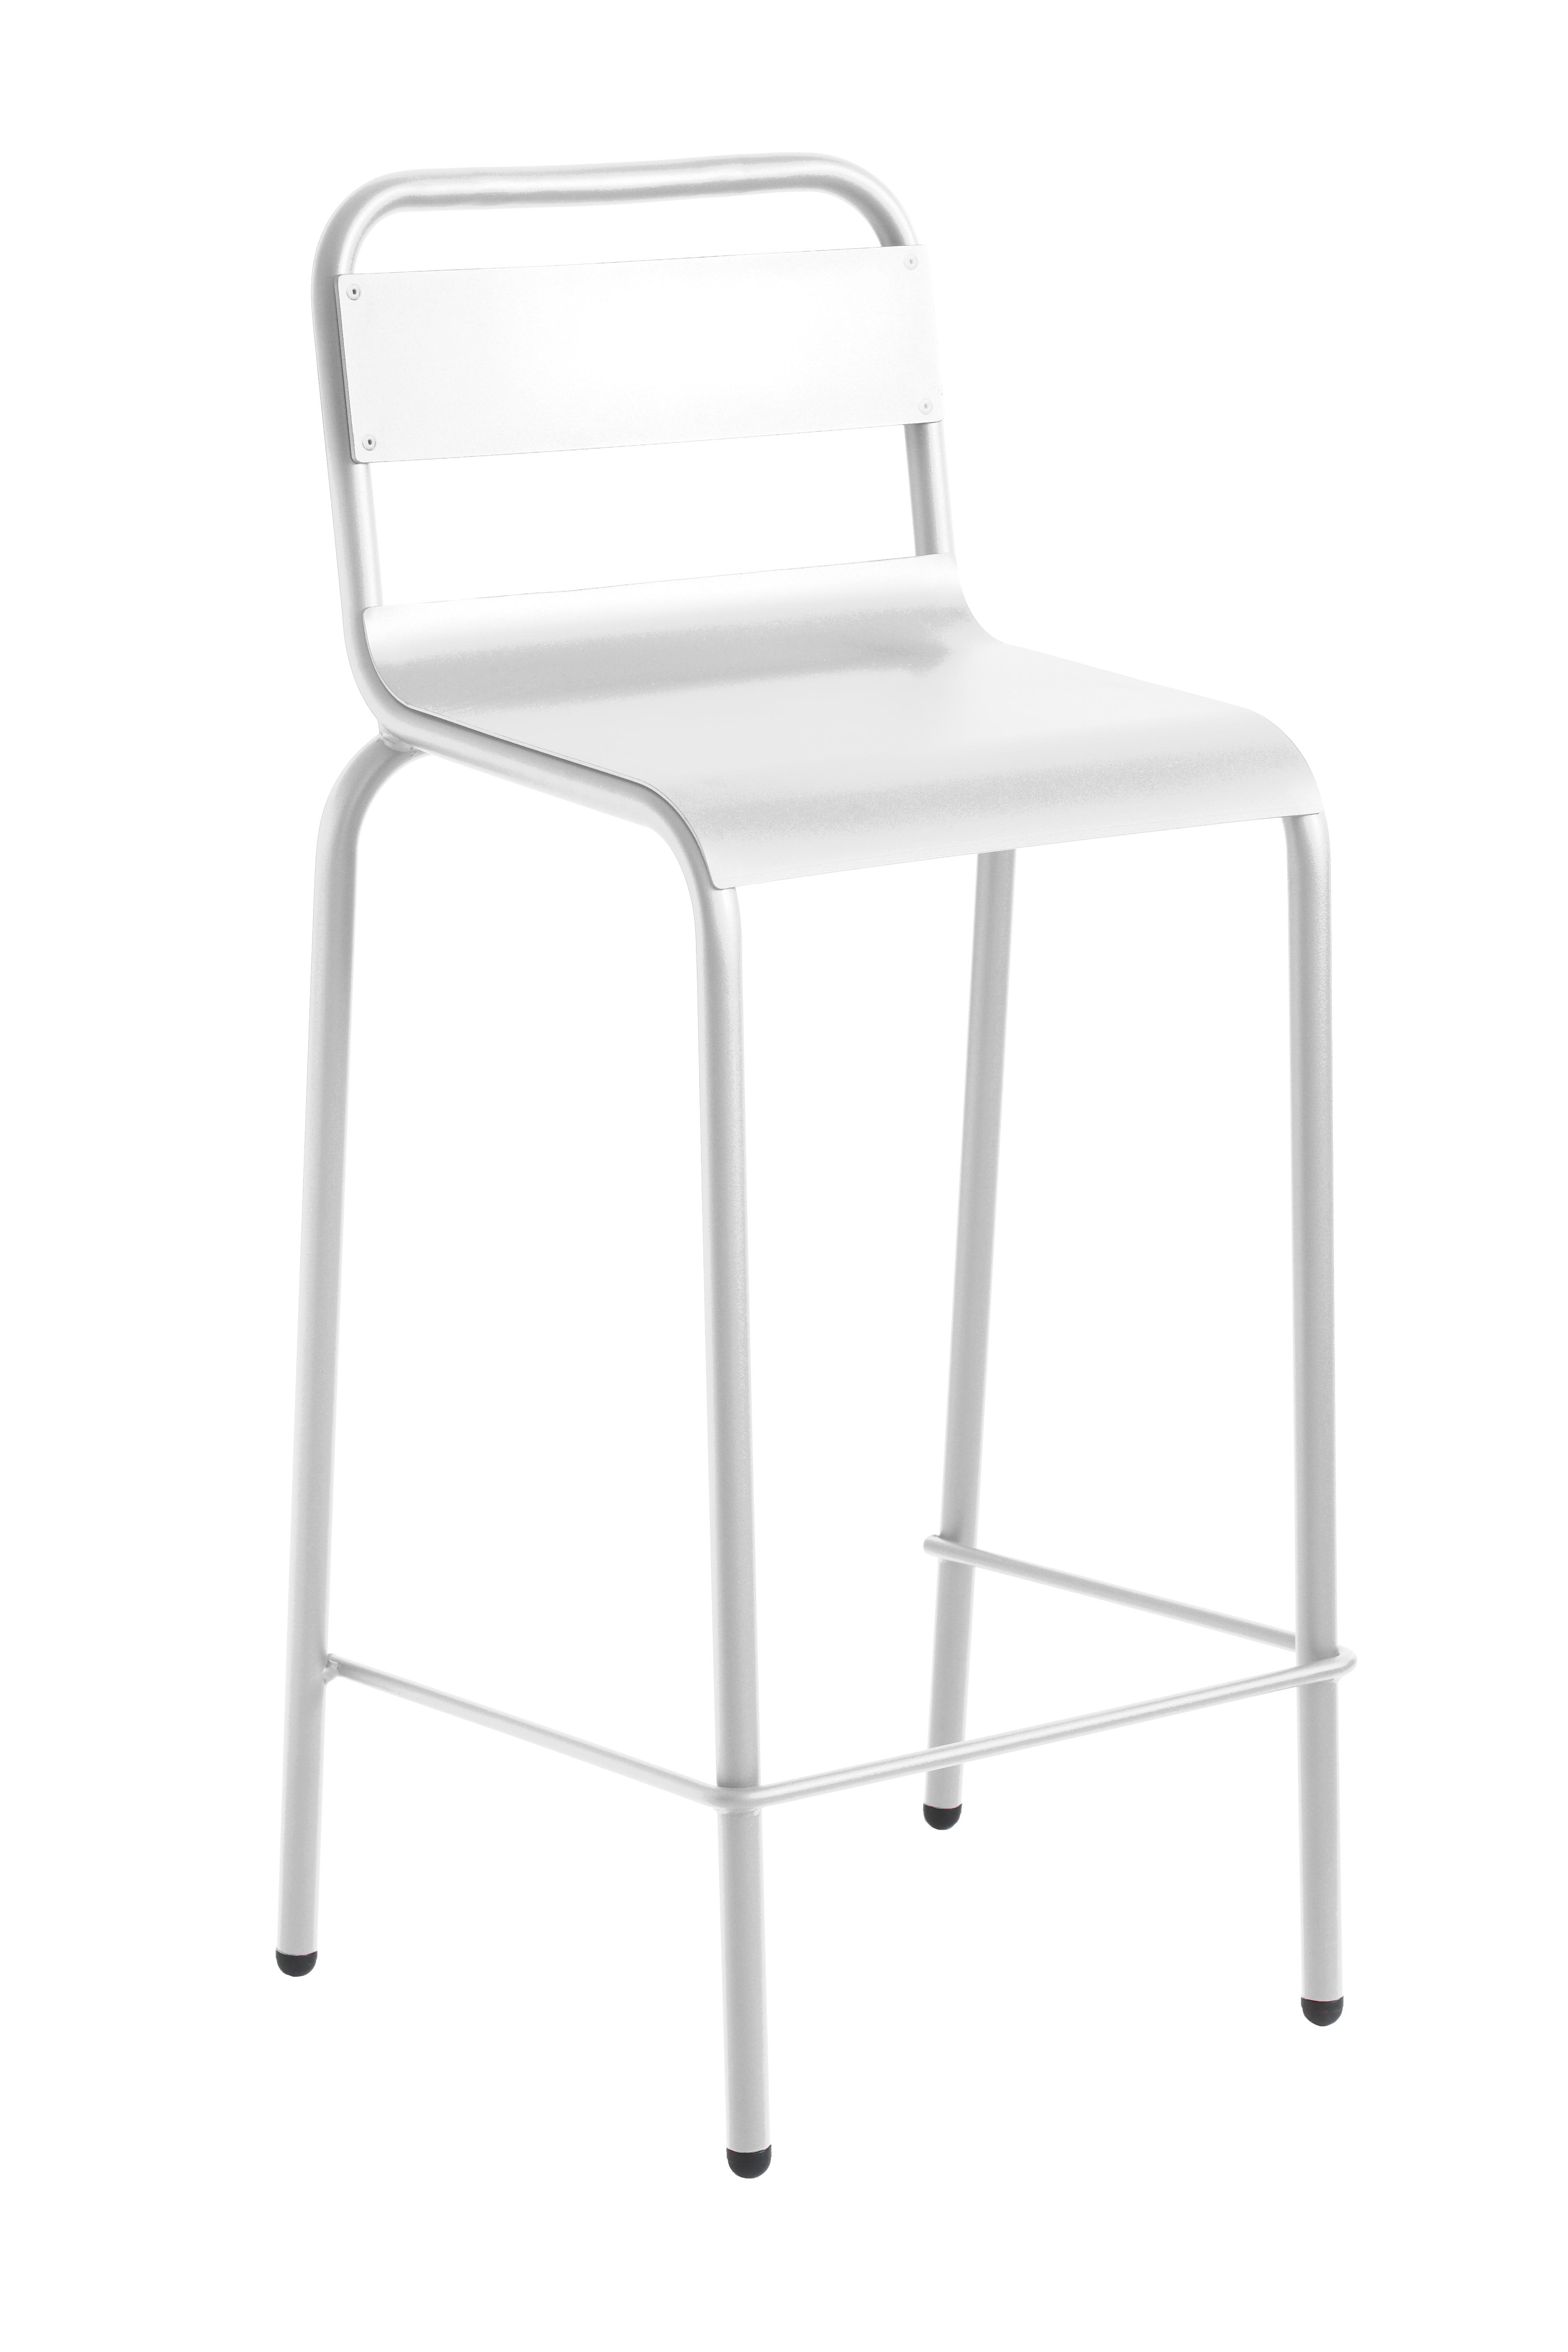 ISIMAR - Barová židle ANGLET nízká - bílá